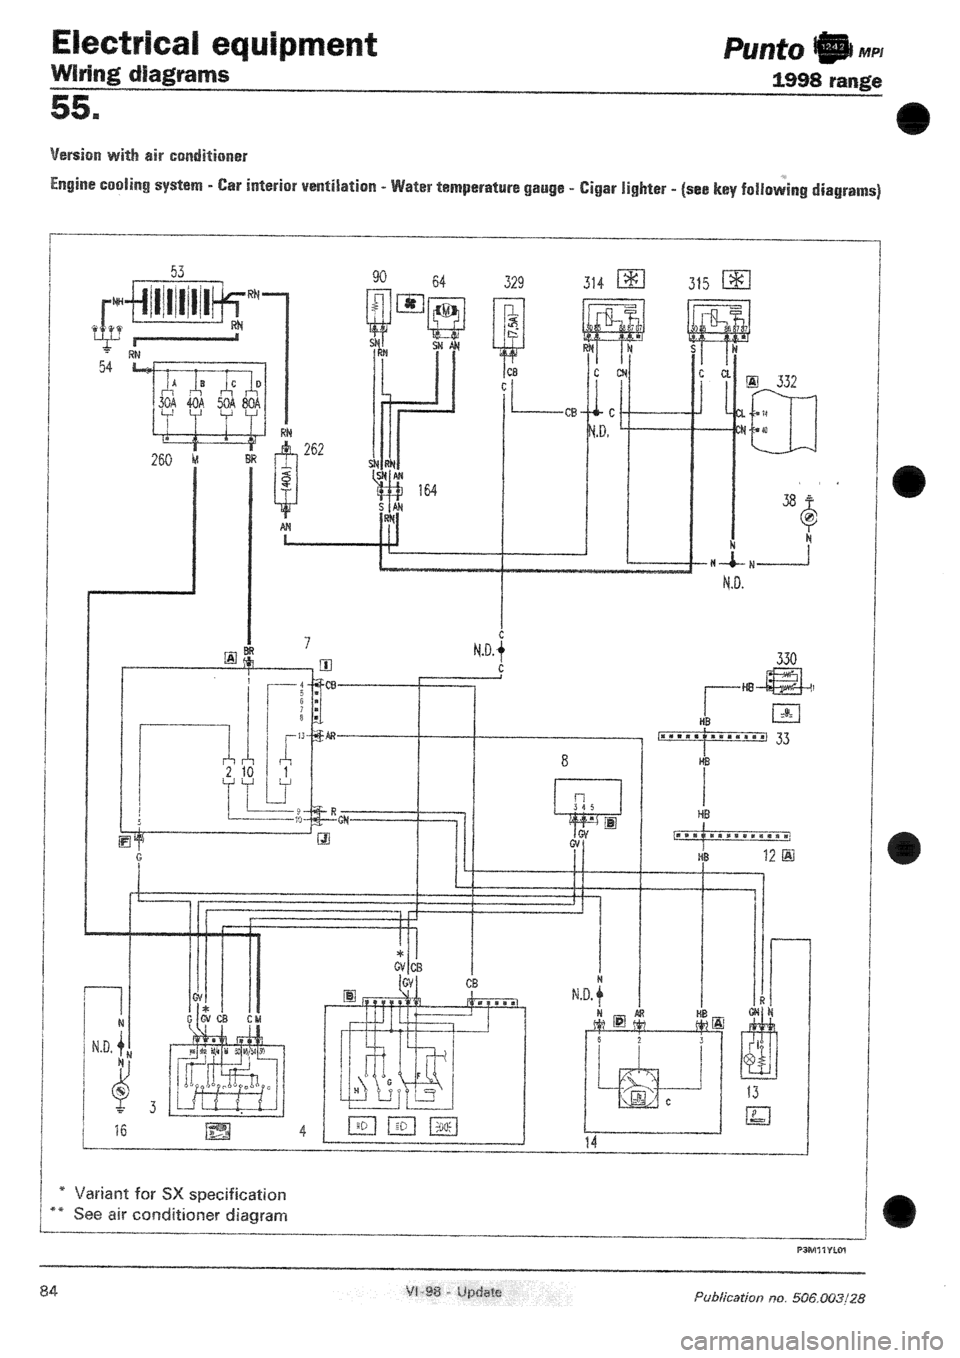 FIAT PUNTO 1998 176 / 1.G Wiring Diagrams User Guide 